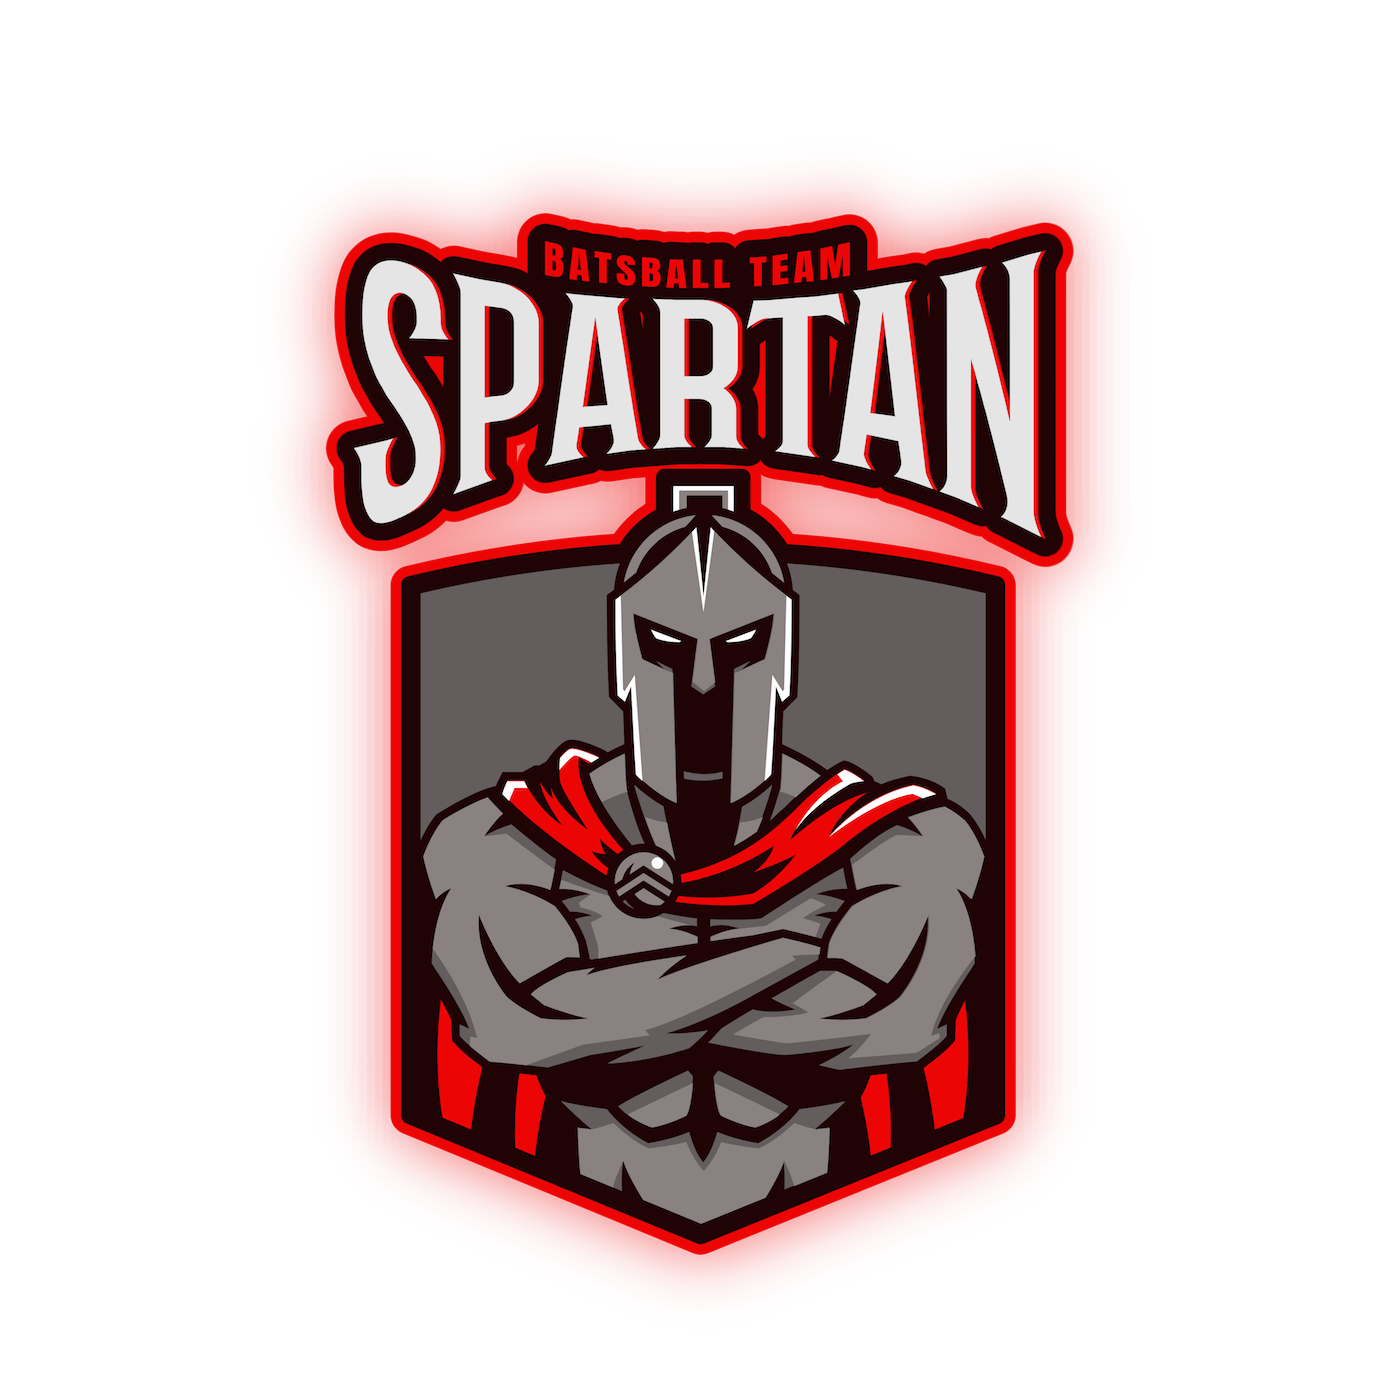 Spartan Batsball Team